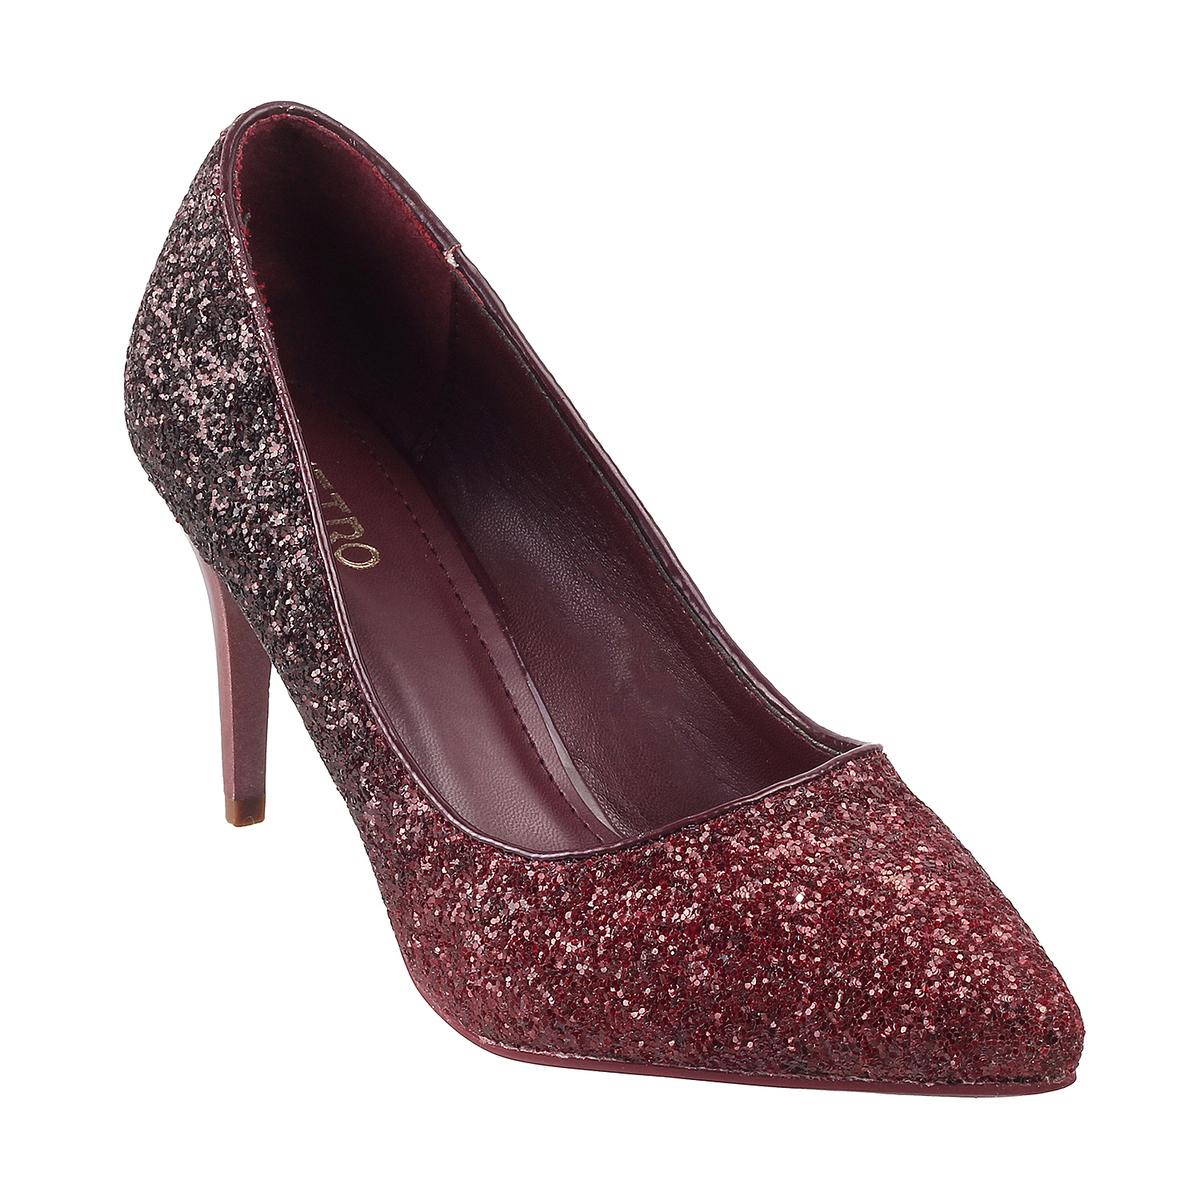 Taiyu High Heels Maroon Shoes Women Open Toe Bridal Wedding Party Shoes Heel  Height 3.9 inch price in UAE | Amazon UAE | kanbkam